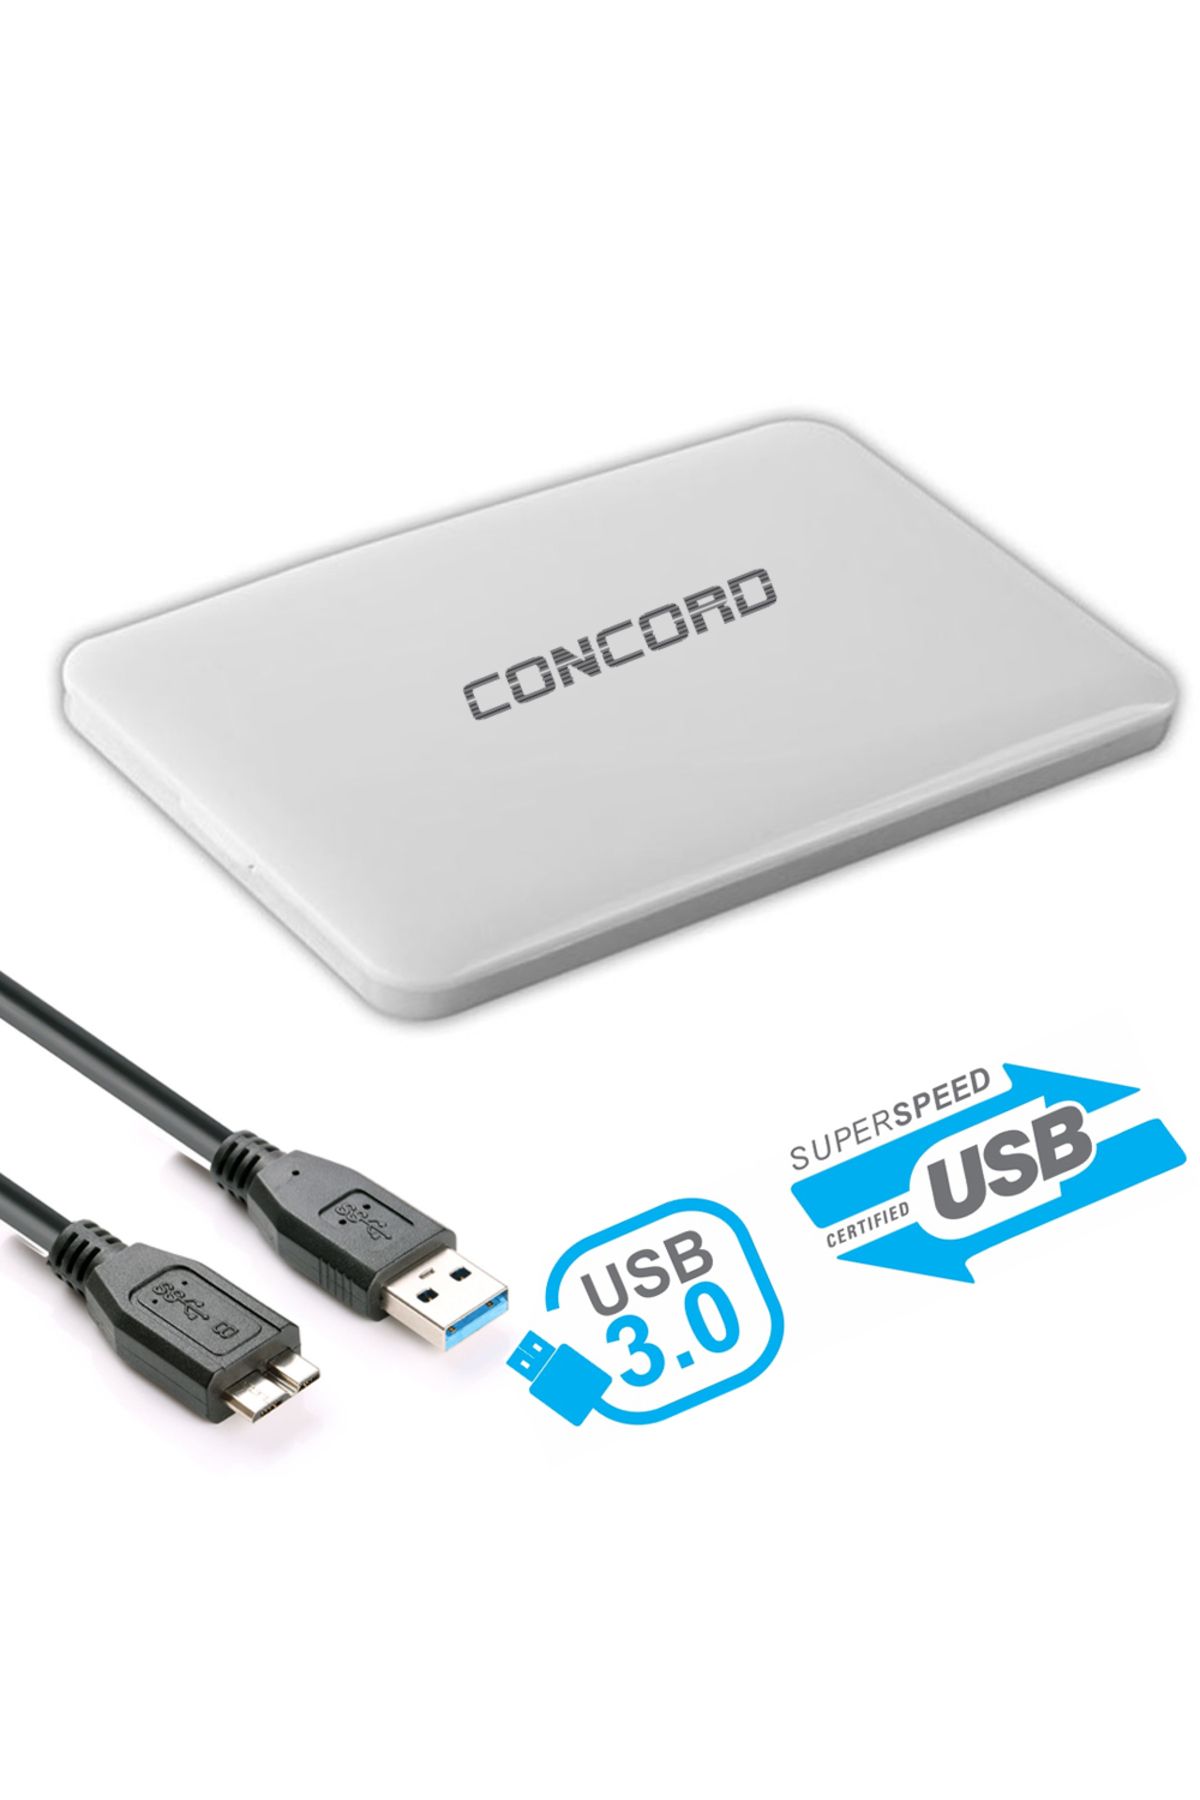 DTS Teknoloji Concord C-855 USB 3.0 6Gbps 2.5 inch Sata SSD/HDD Harddisk Kutusu Beyaz